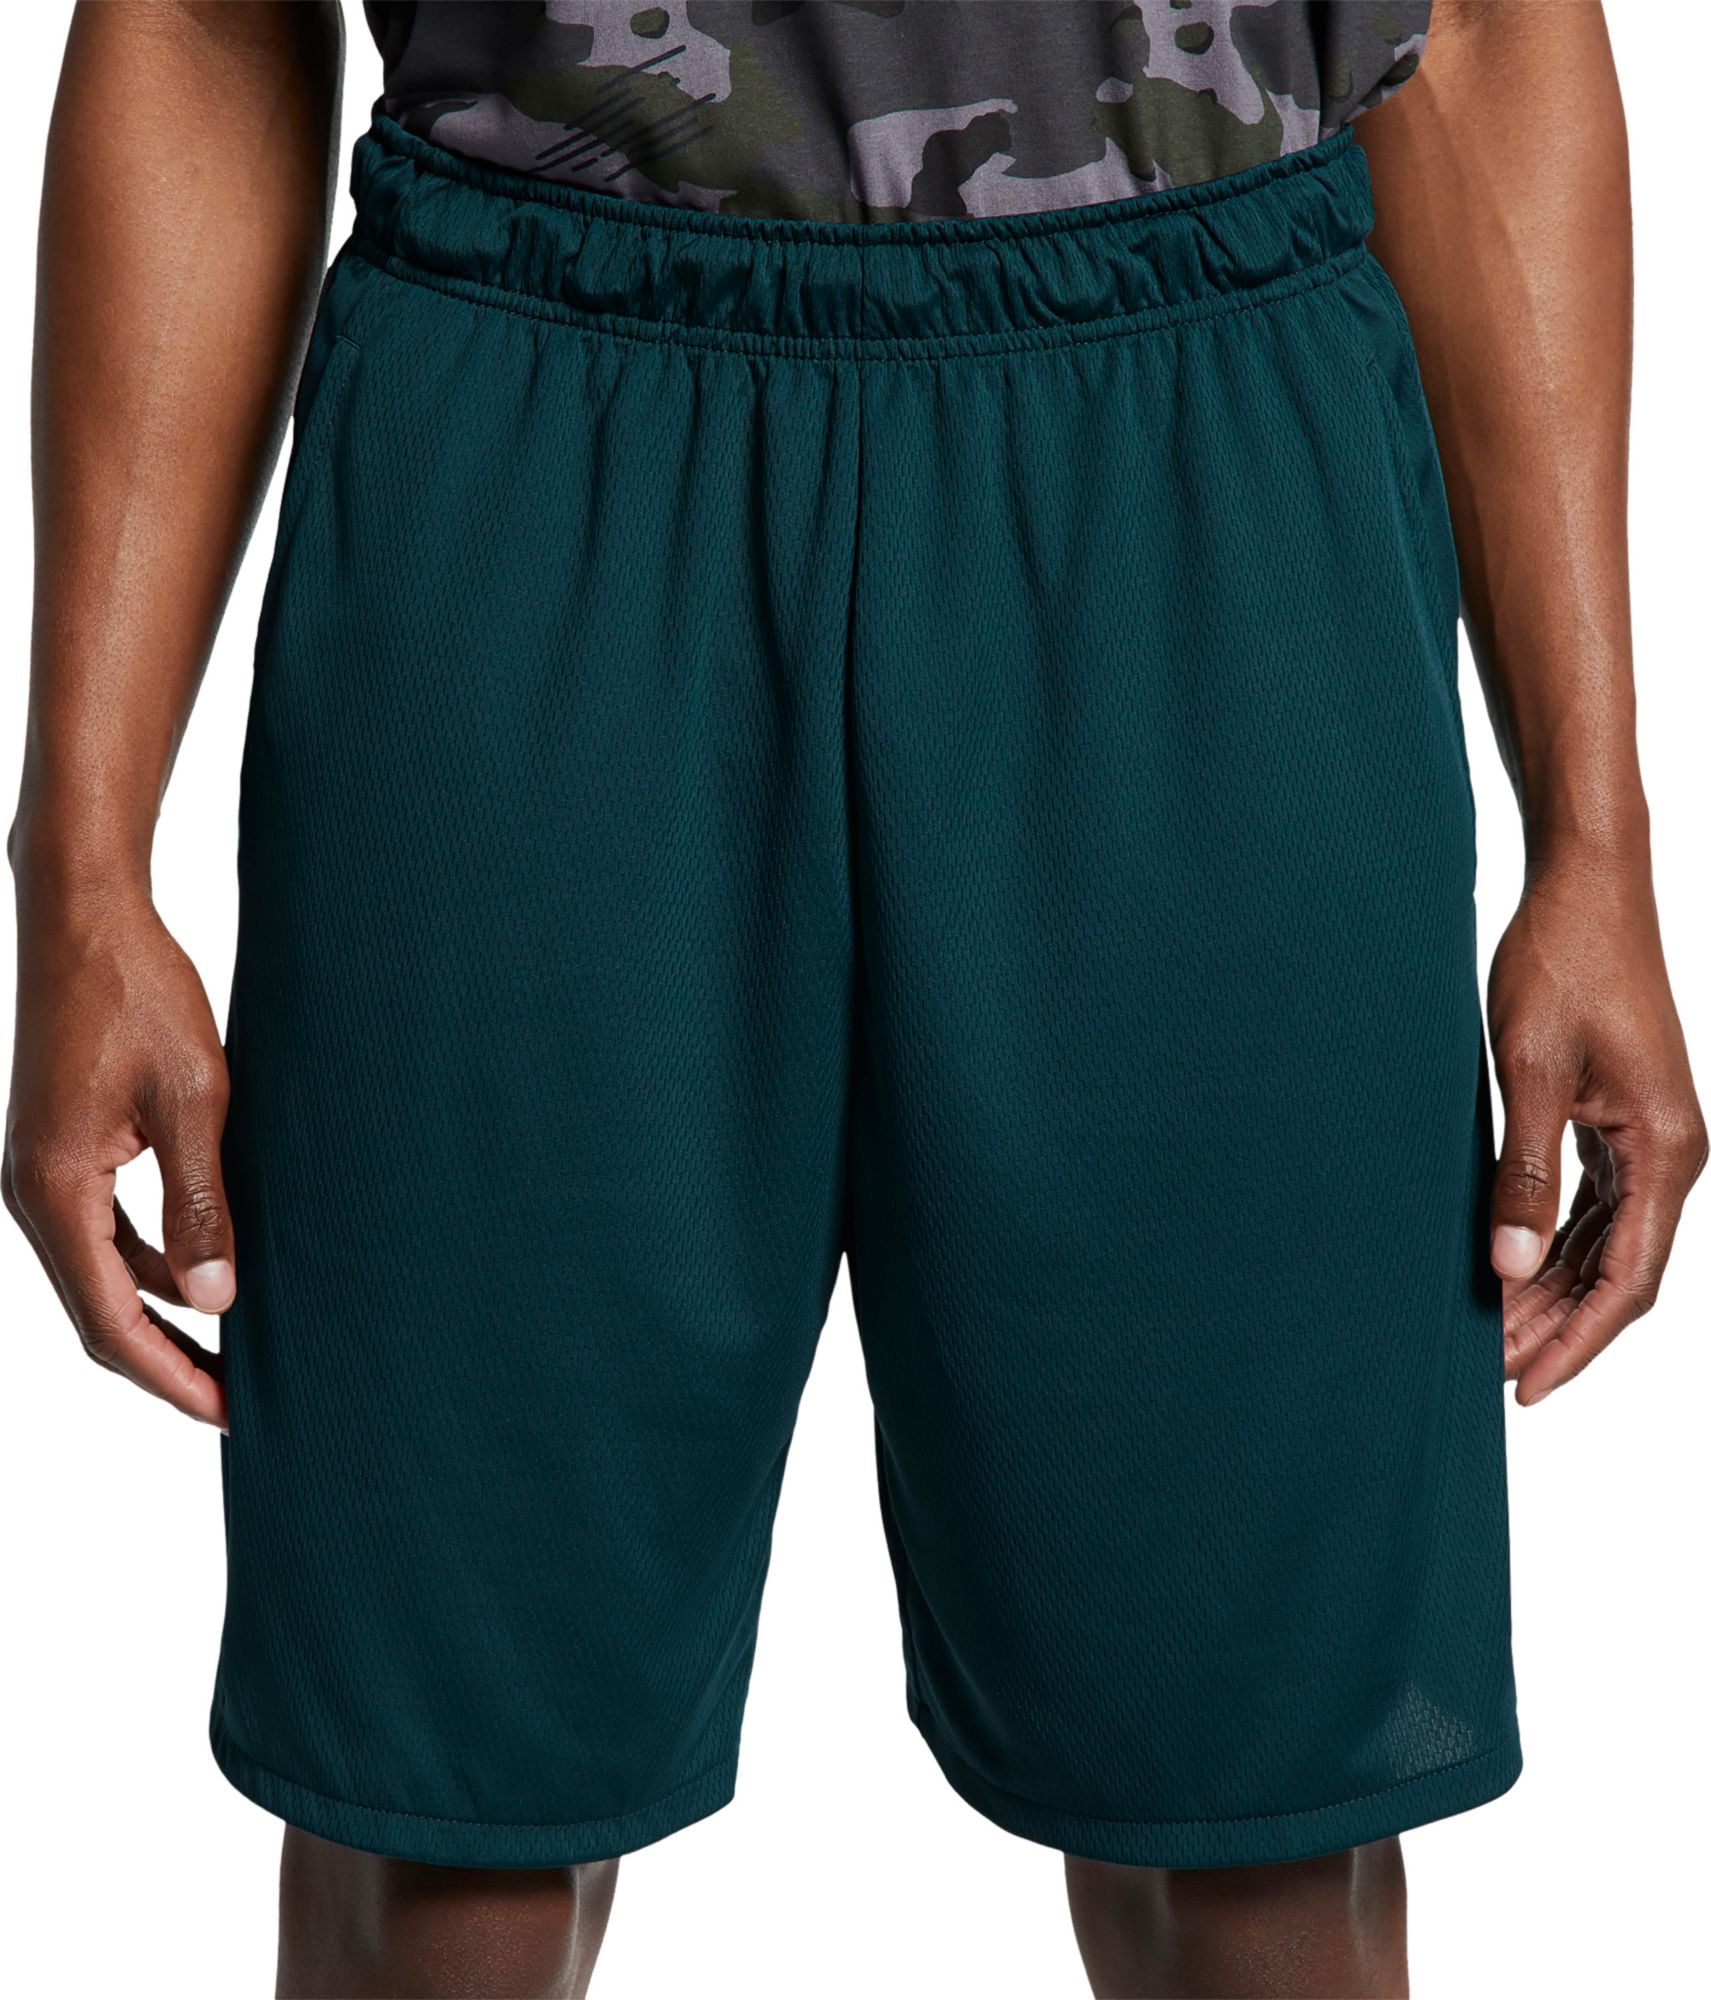 Nike - Nike Men's Dry 4.0 Training Shorts - Walmart.com - Walmart.com